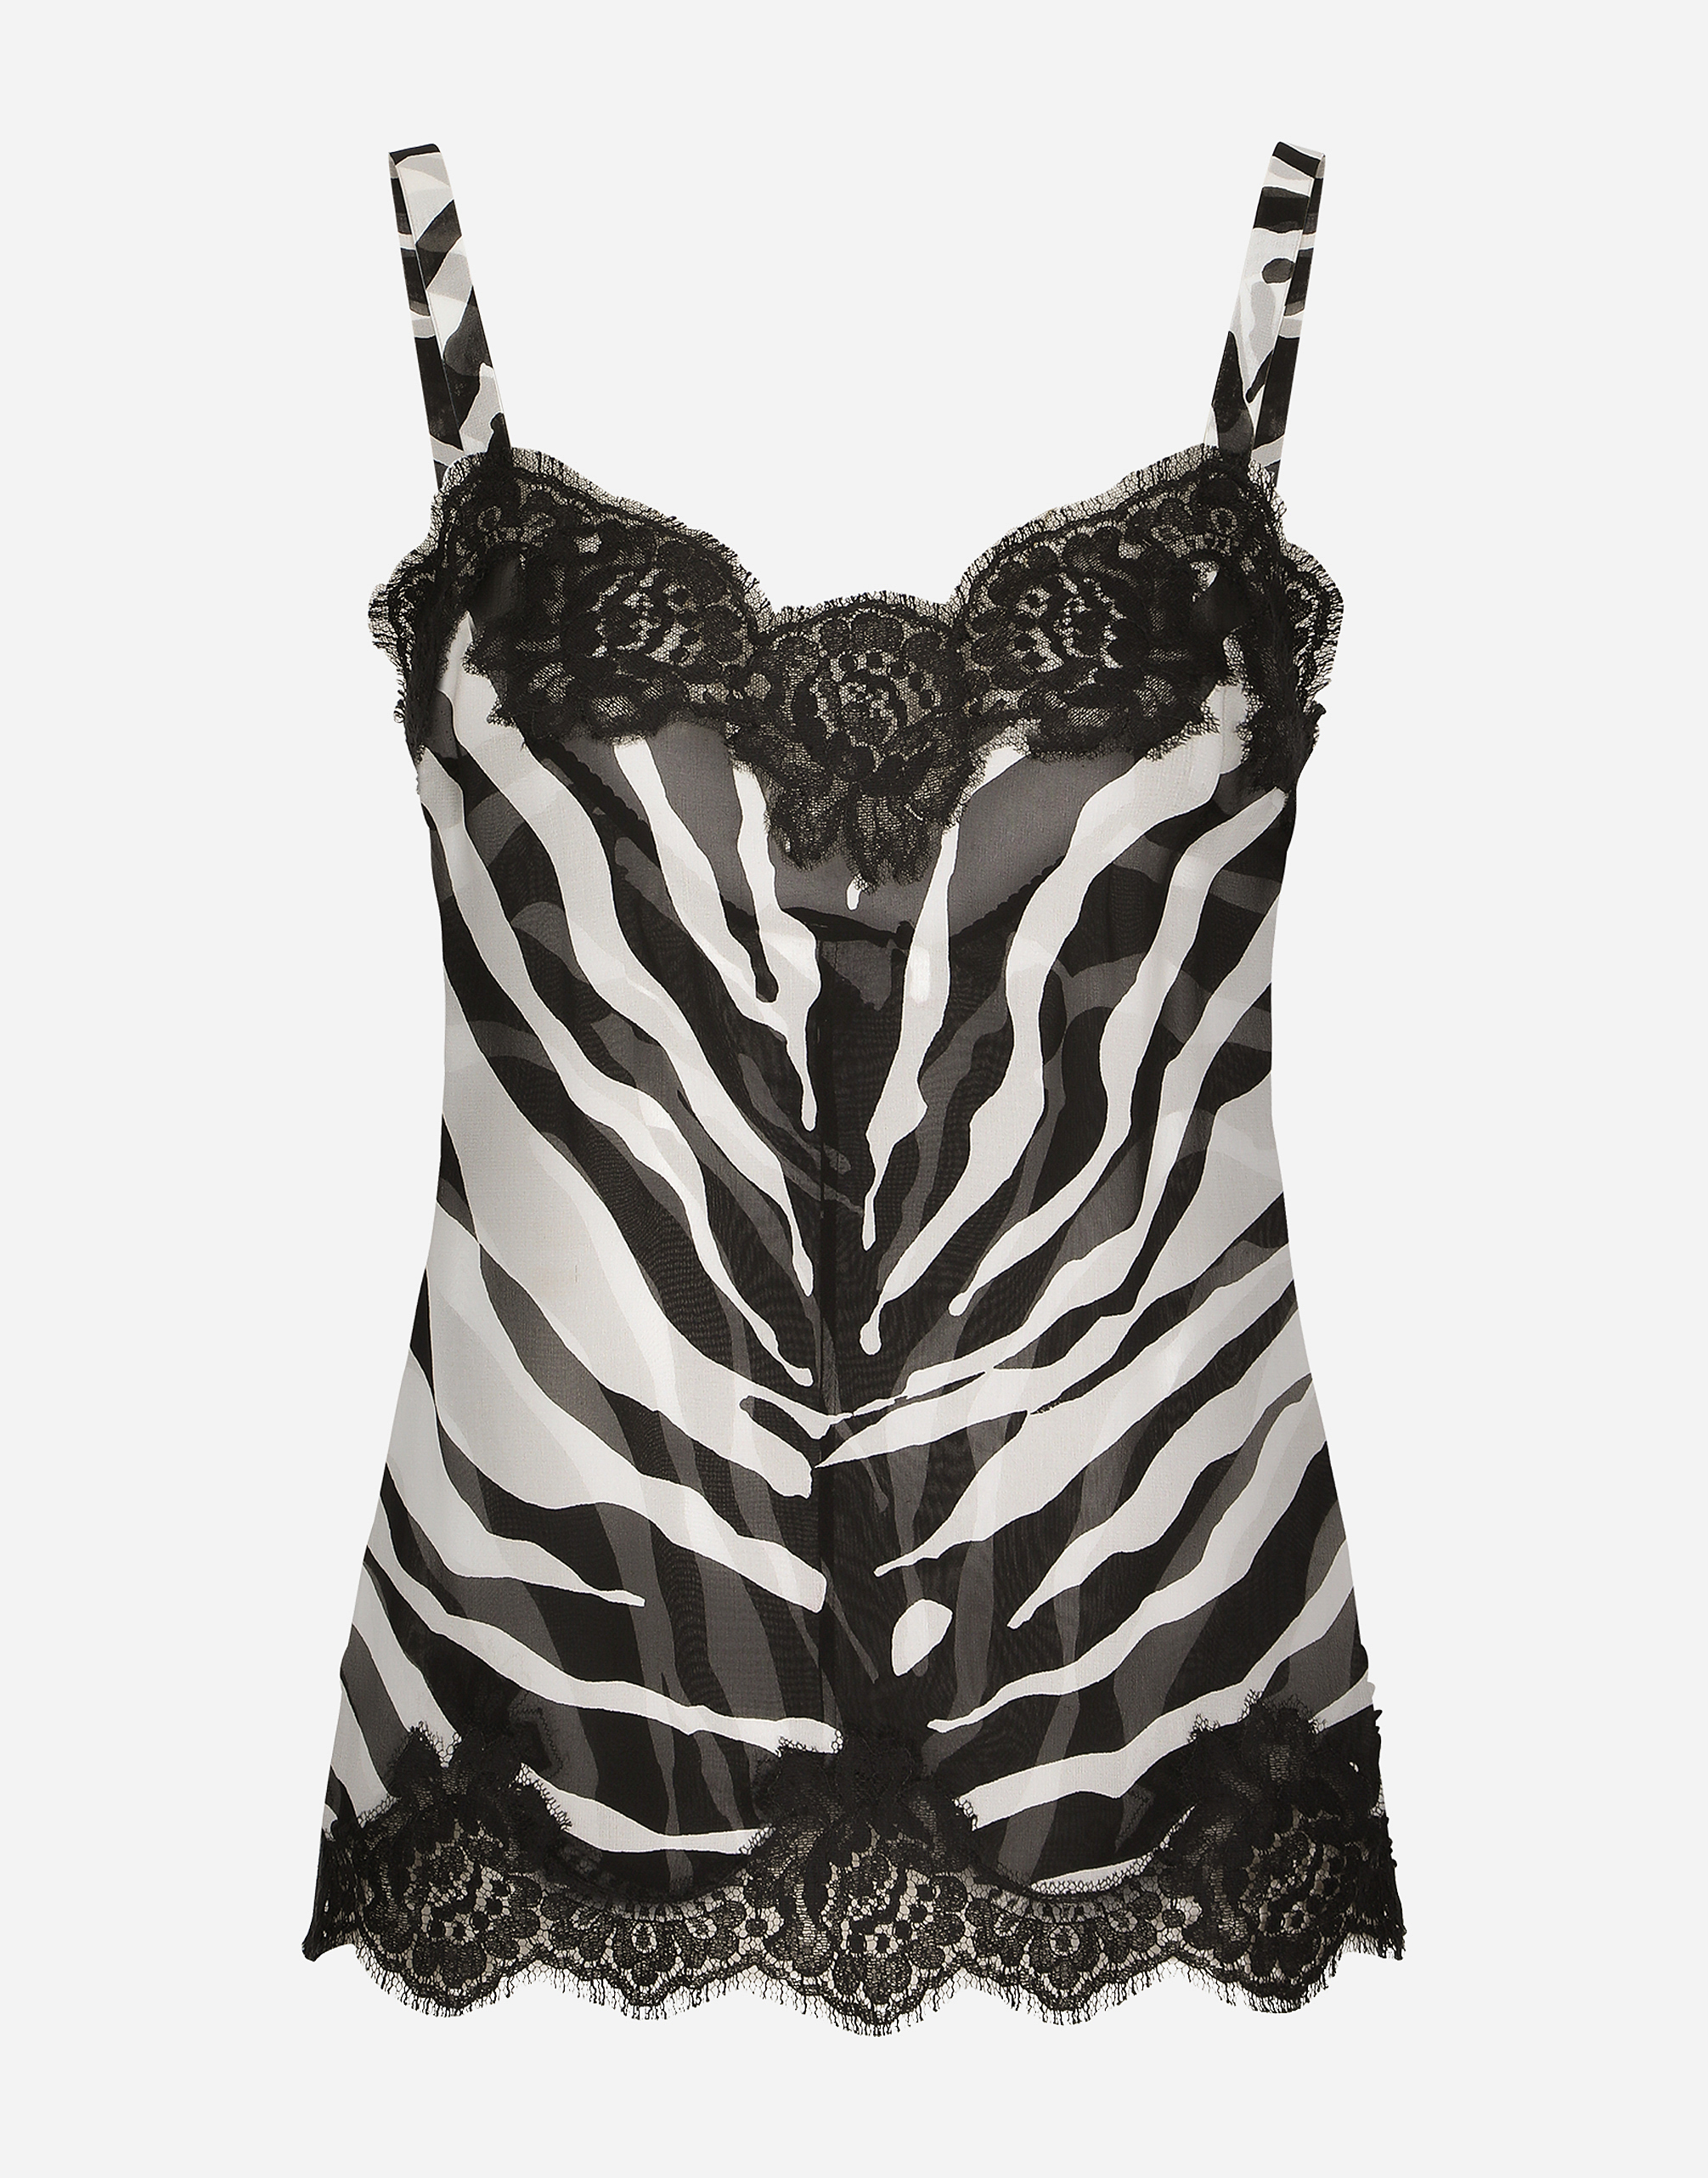 Dolce & Gabbana Zebra-print Chiffon Underwear-style Top With Lace Detailing In Animal Print